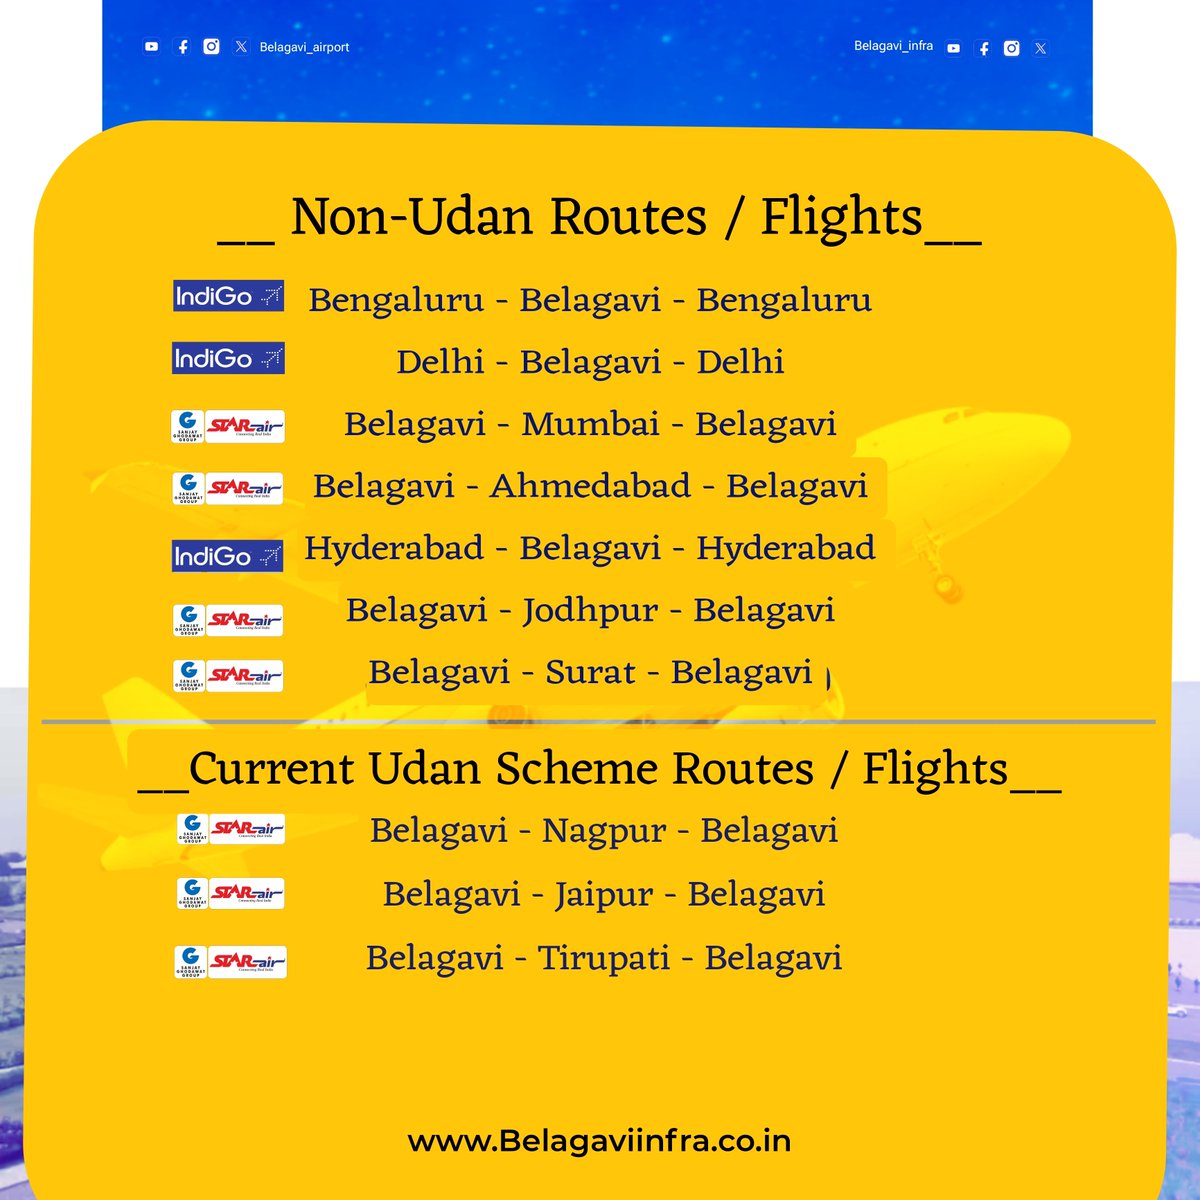 Belagavi Airport: Udan Scheme Routes/flights and Non-Udan Scheme Routes/flights details.

ಬೆಳಗಾವಿ ವಿಮಾನ ನಿಲ್ದಾಣ : 
ಉಡಾನ್ ಯೋಜನೆಗೆ ಒಳಪಟ್ಟ ವಿಮಾನ ಸೇವೆಗಳು ಮತ್ತು ಉಡಾನ್ ಯೋಜನೆ ರಹಿತ ವಿಮಾನ ಸೇವೆಗಳ ವಿವರ 

#BelagaviAirport #Karnataka #IXG #UdanScheme #Airlines